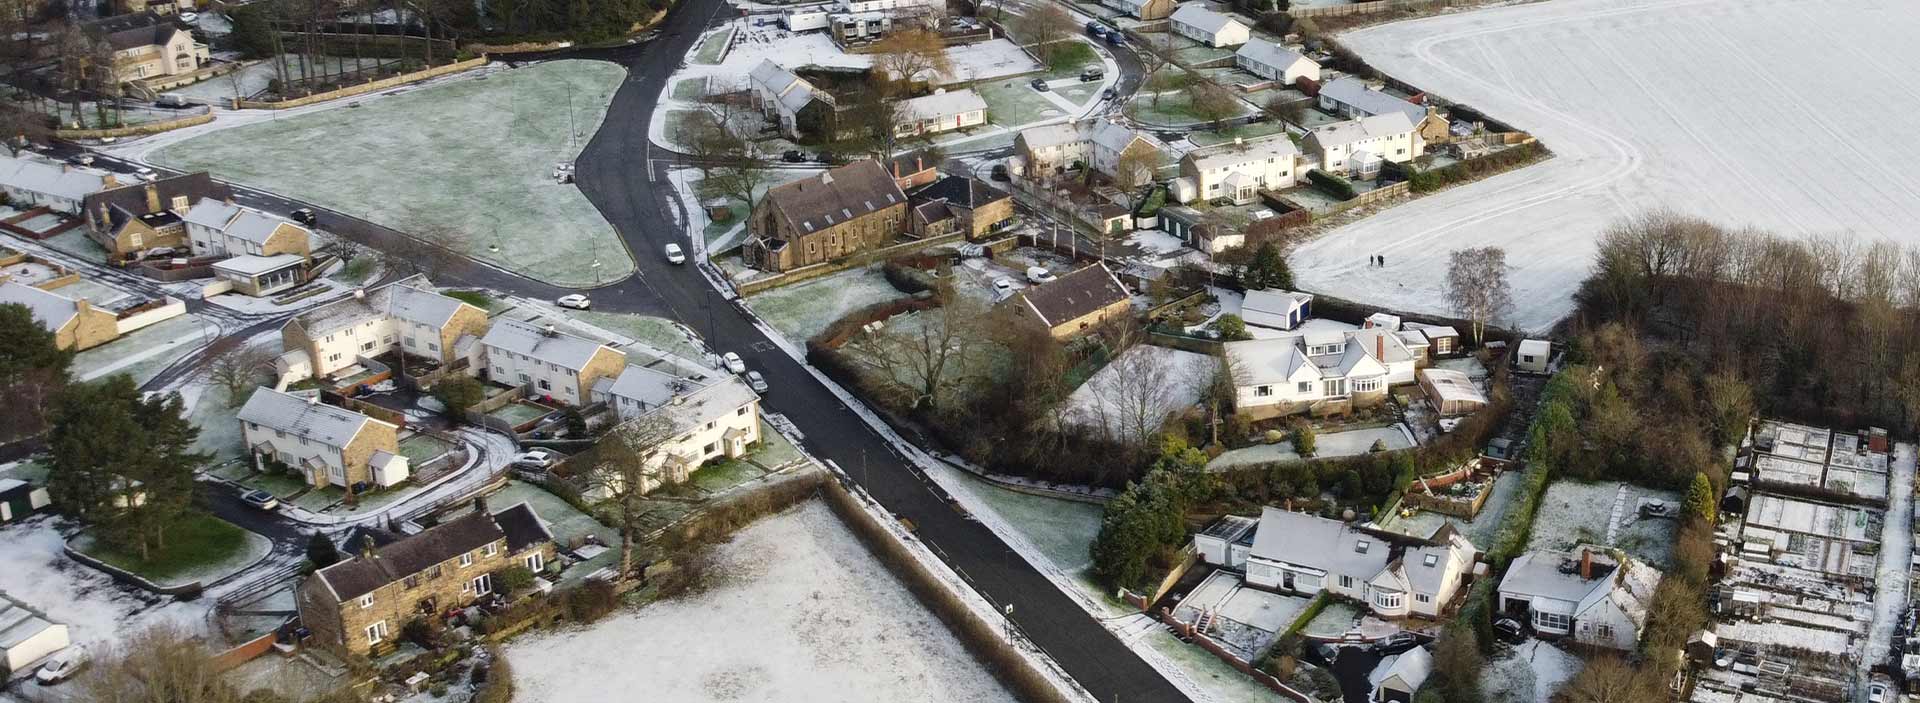 aerial view of Walbottle Village in winter